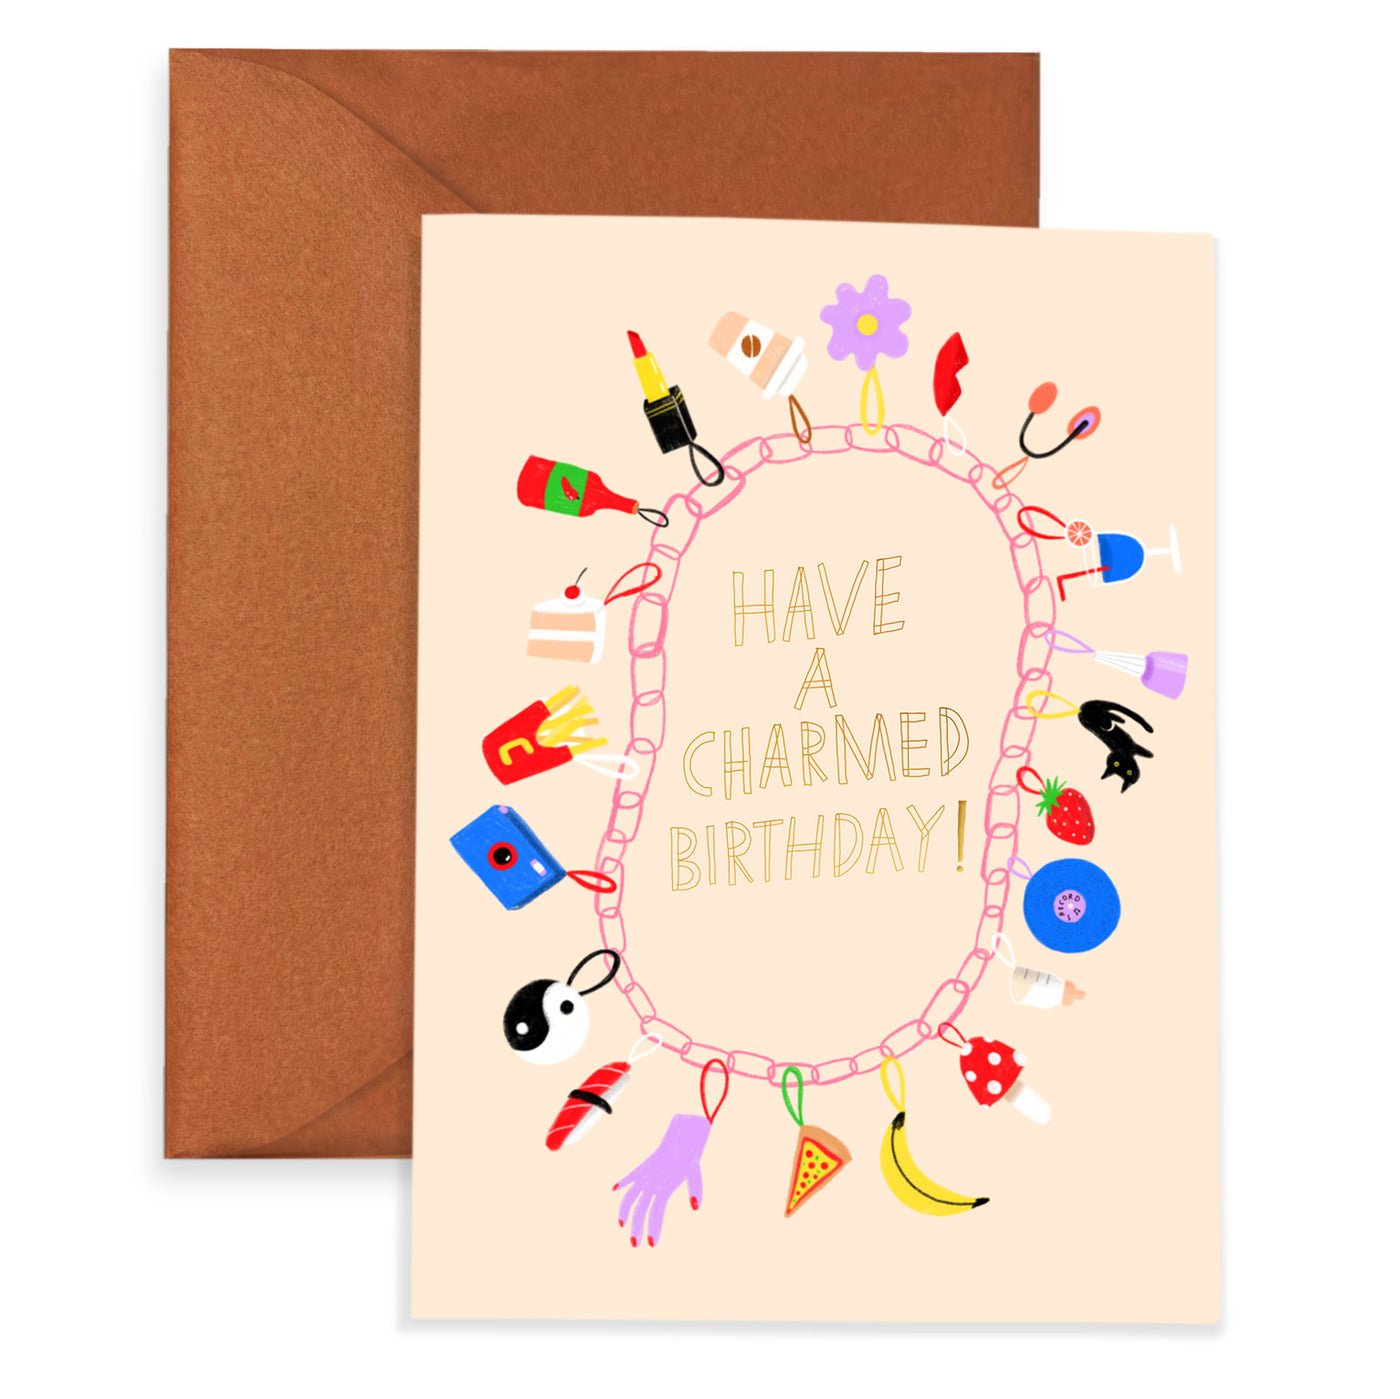 CHARMED BIRTHDAY - Birthday Card